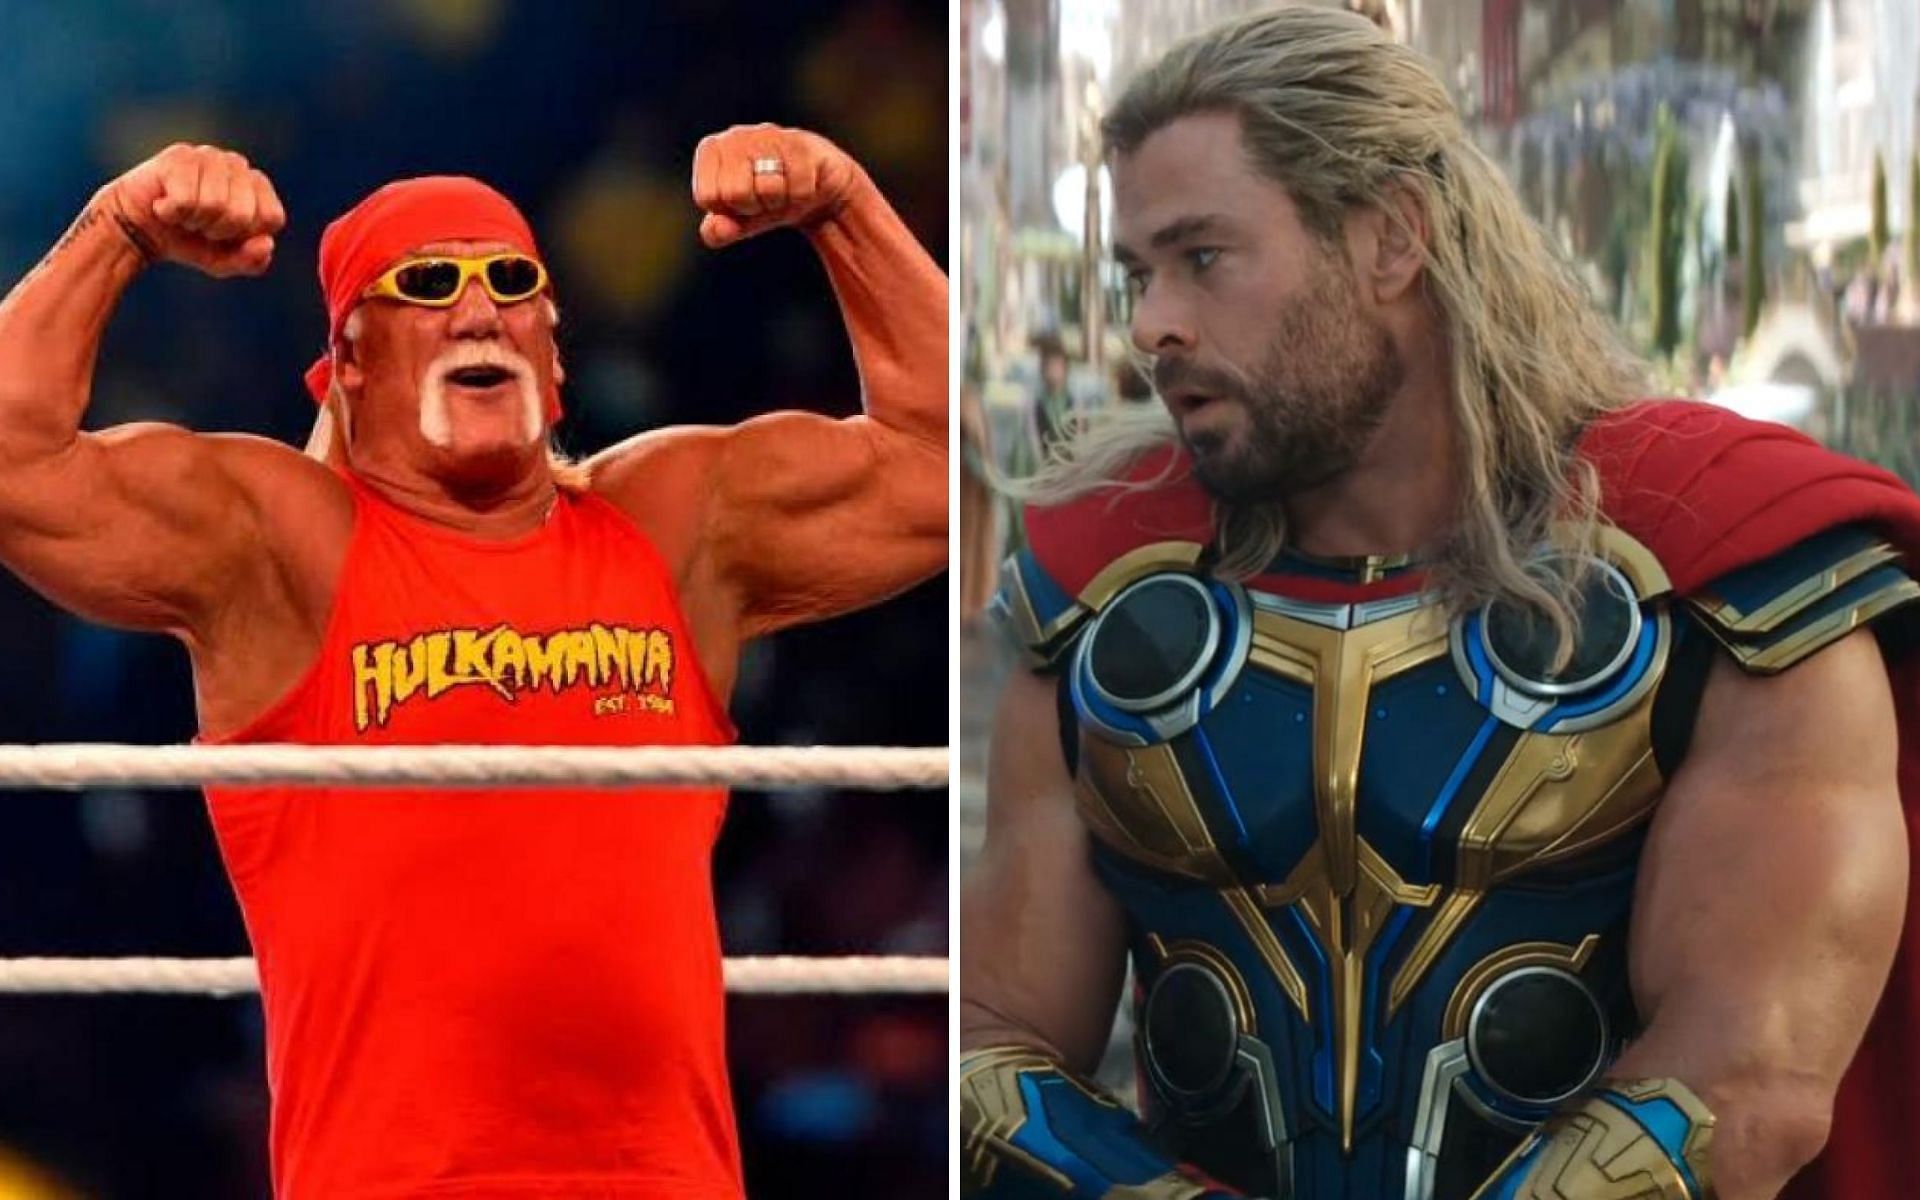 Chris Hemsworth is set to play Hulk Hogan!